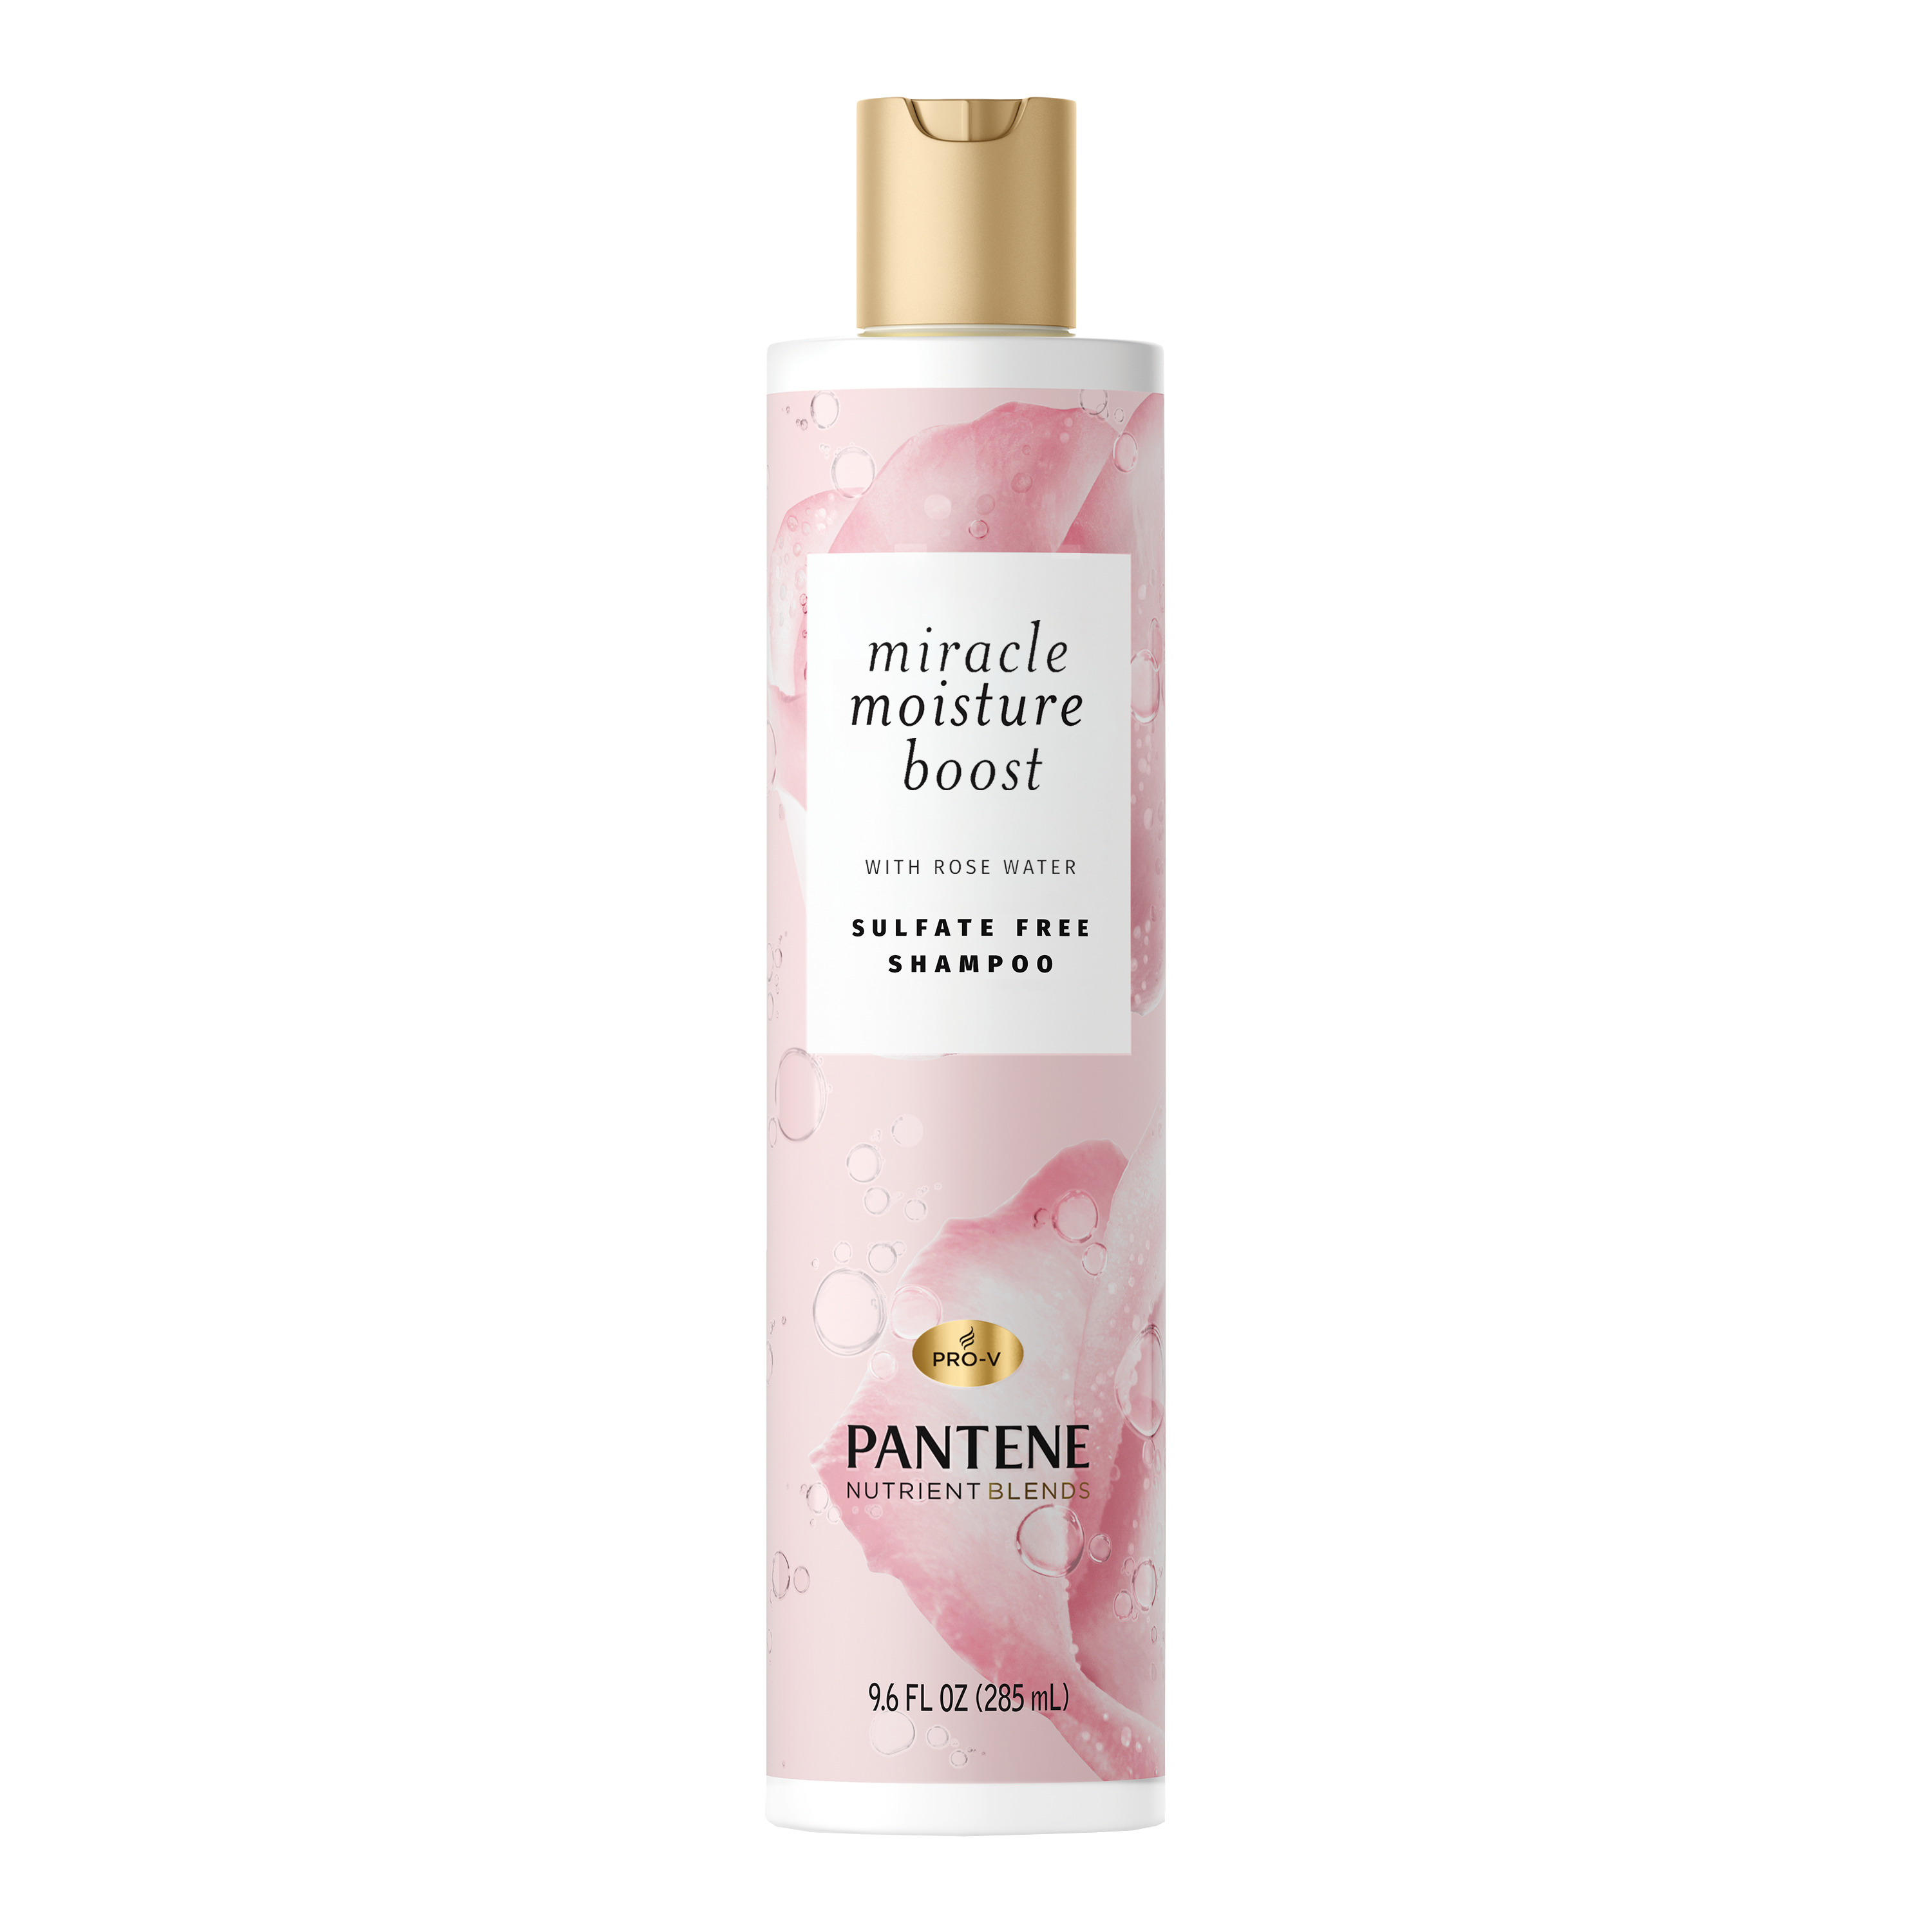 Pantene Nutrient Blends Shampoo, Moisture Boost Rose Water, 9.6 fl oz - image 1 of 10